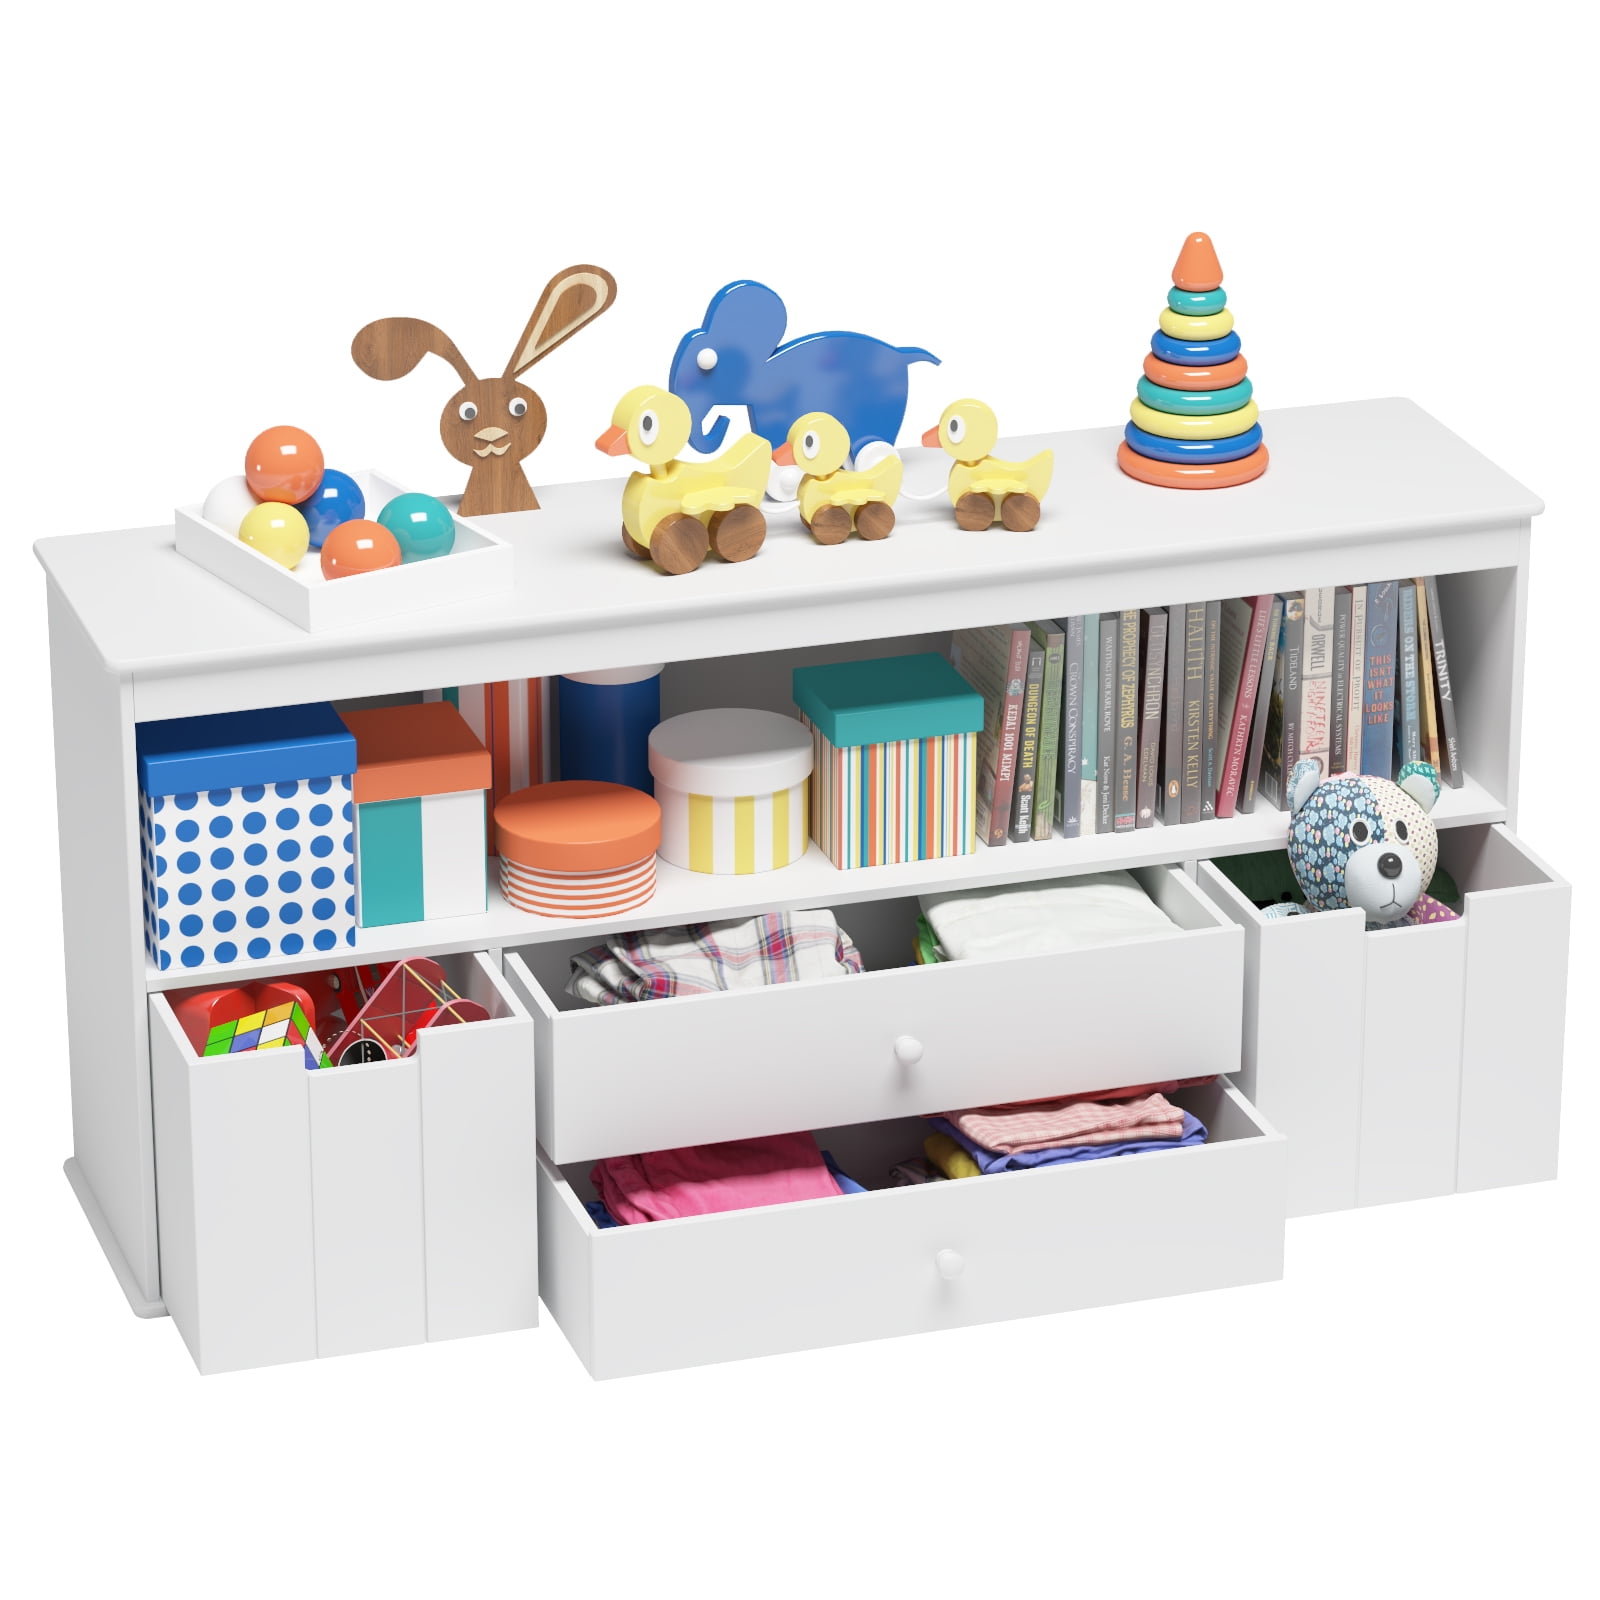 Red Square Bins Storage Kids Toy Chest & Desk6 Non-Woven Drawers Bookshelf 